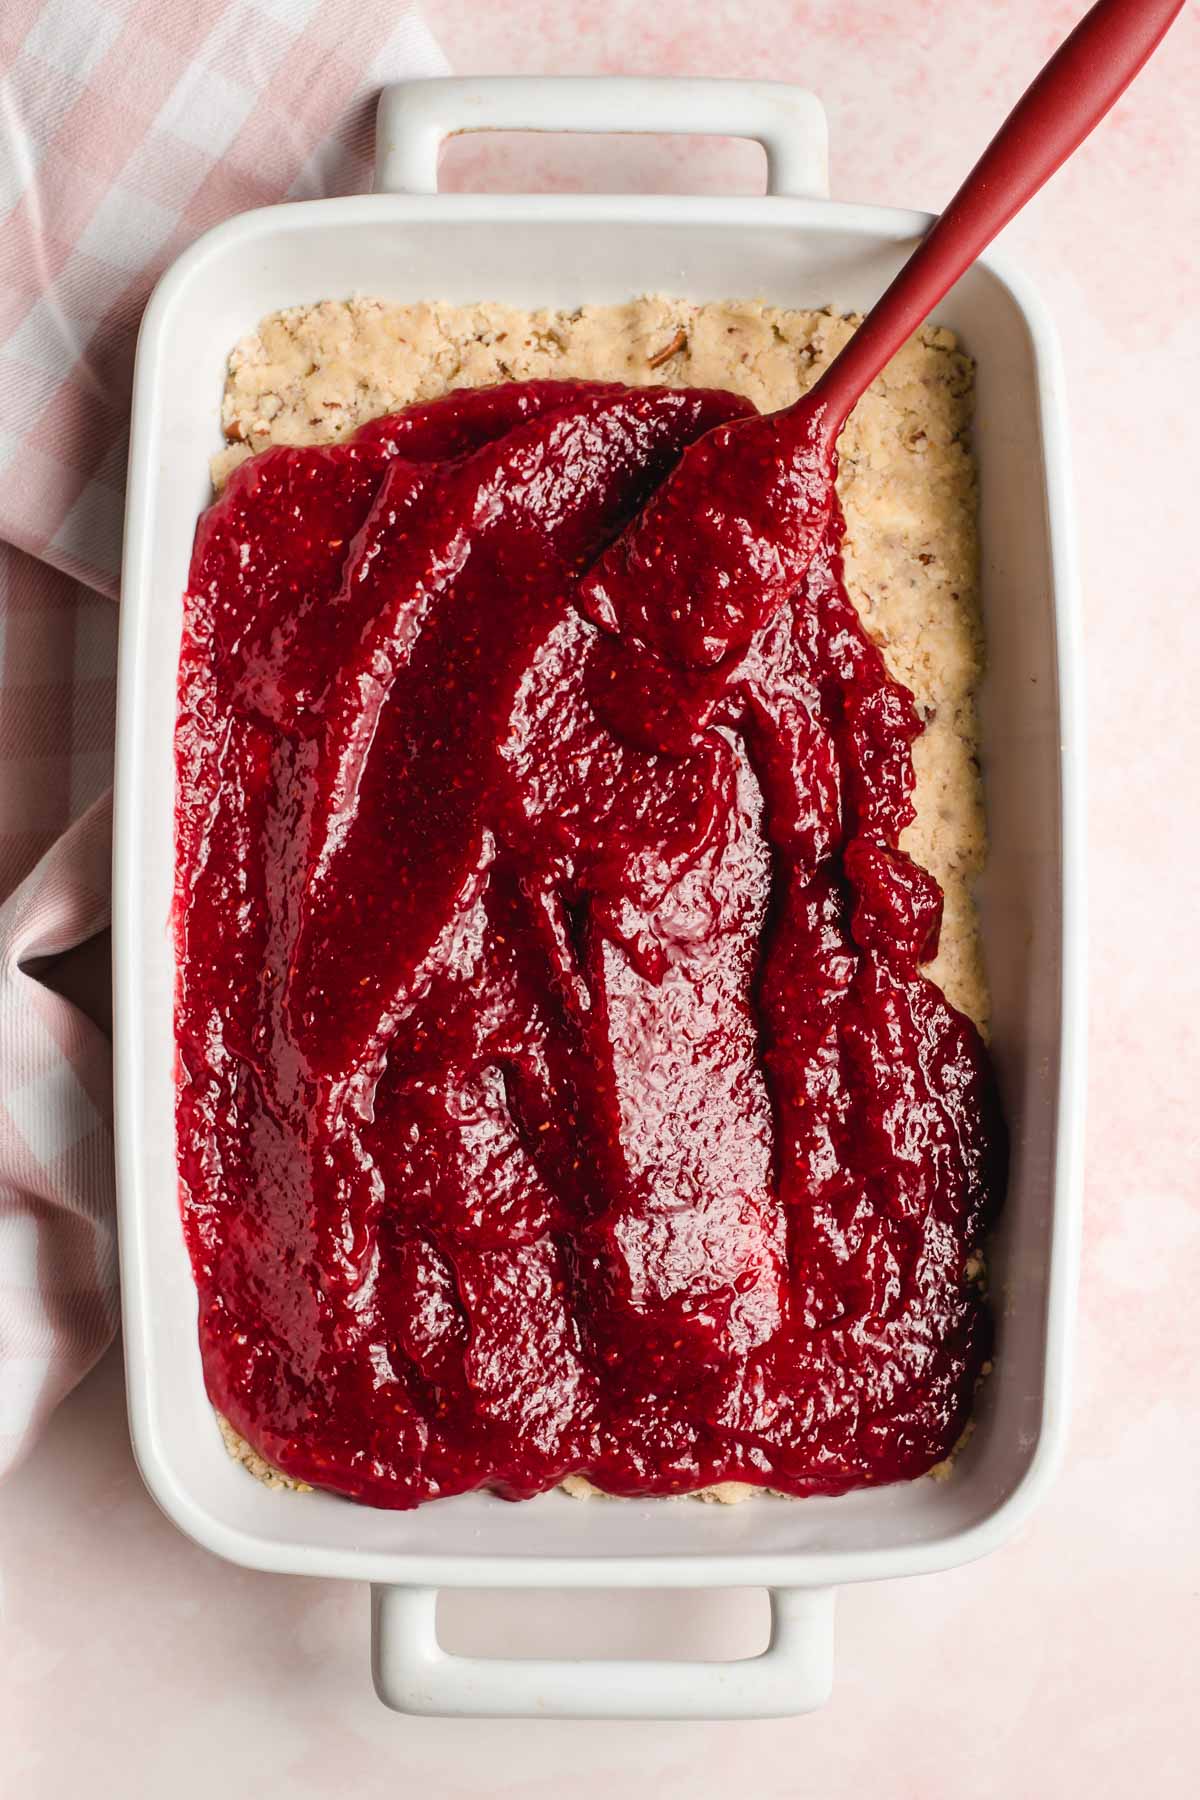 Raspberry jam being spread over a shortbread crust.